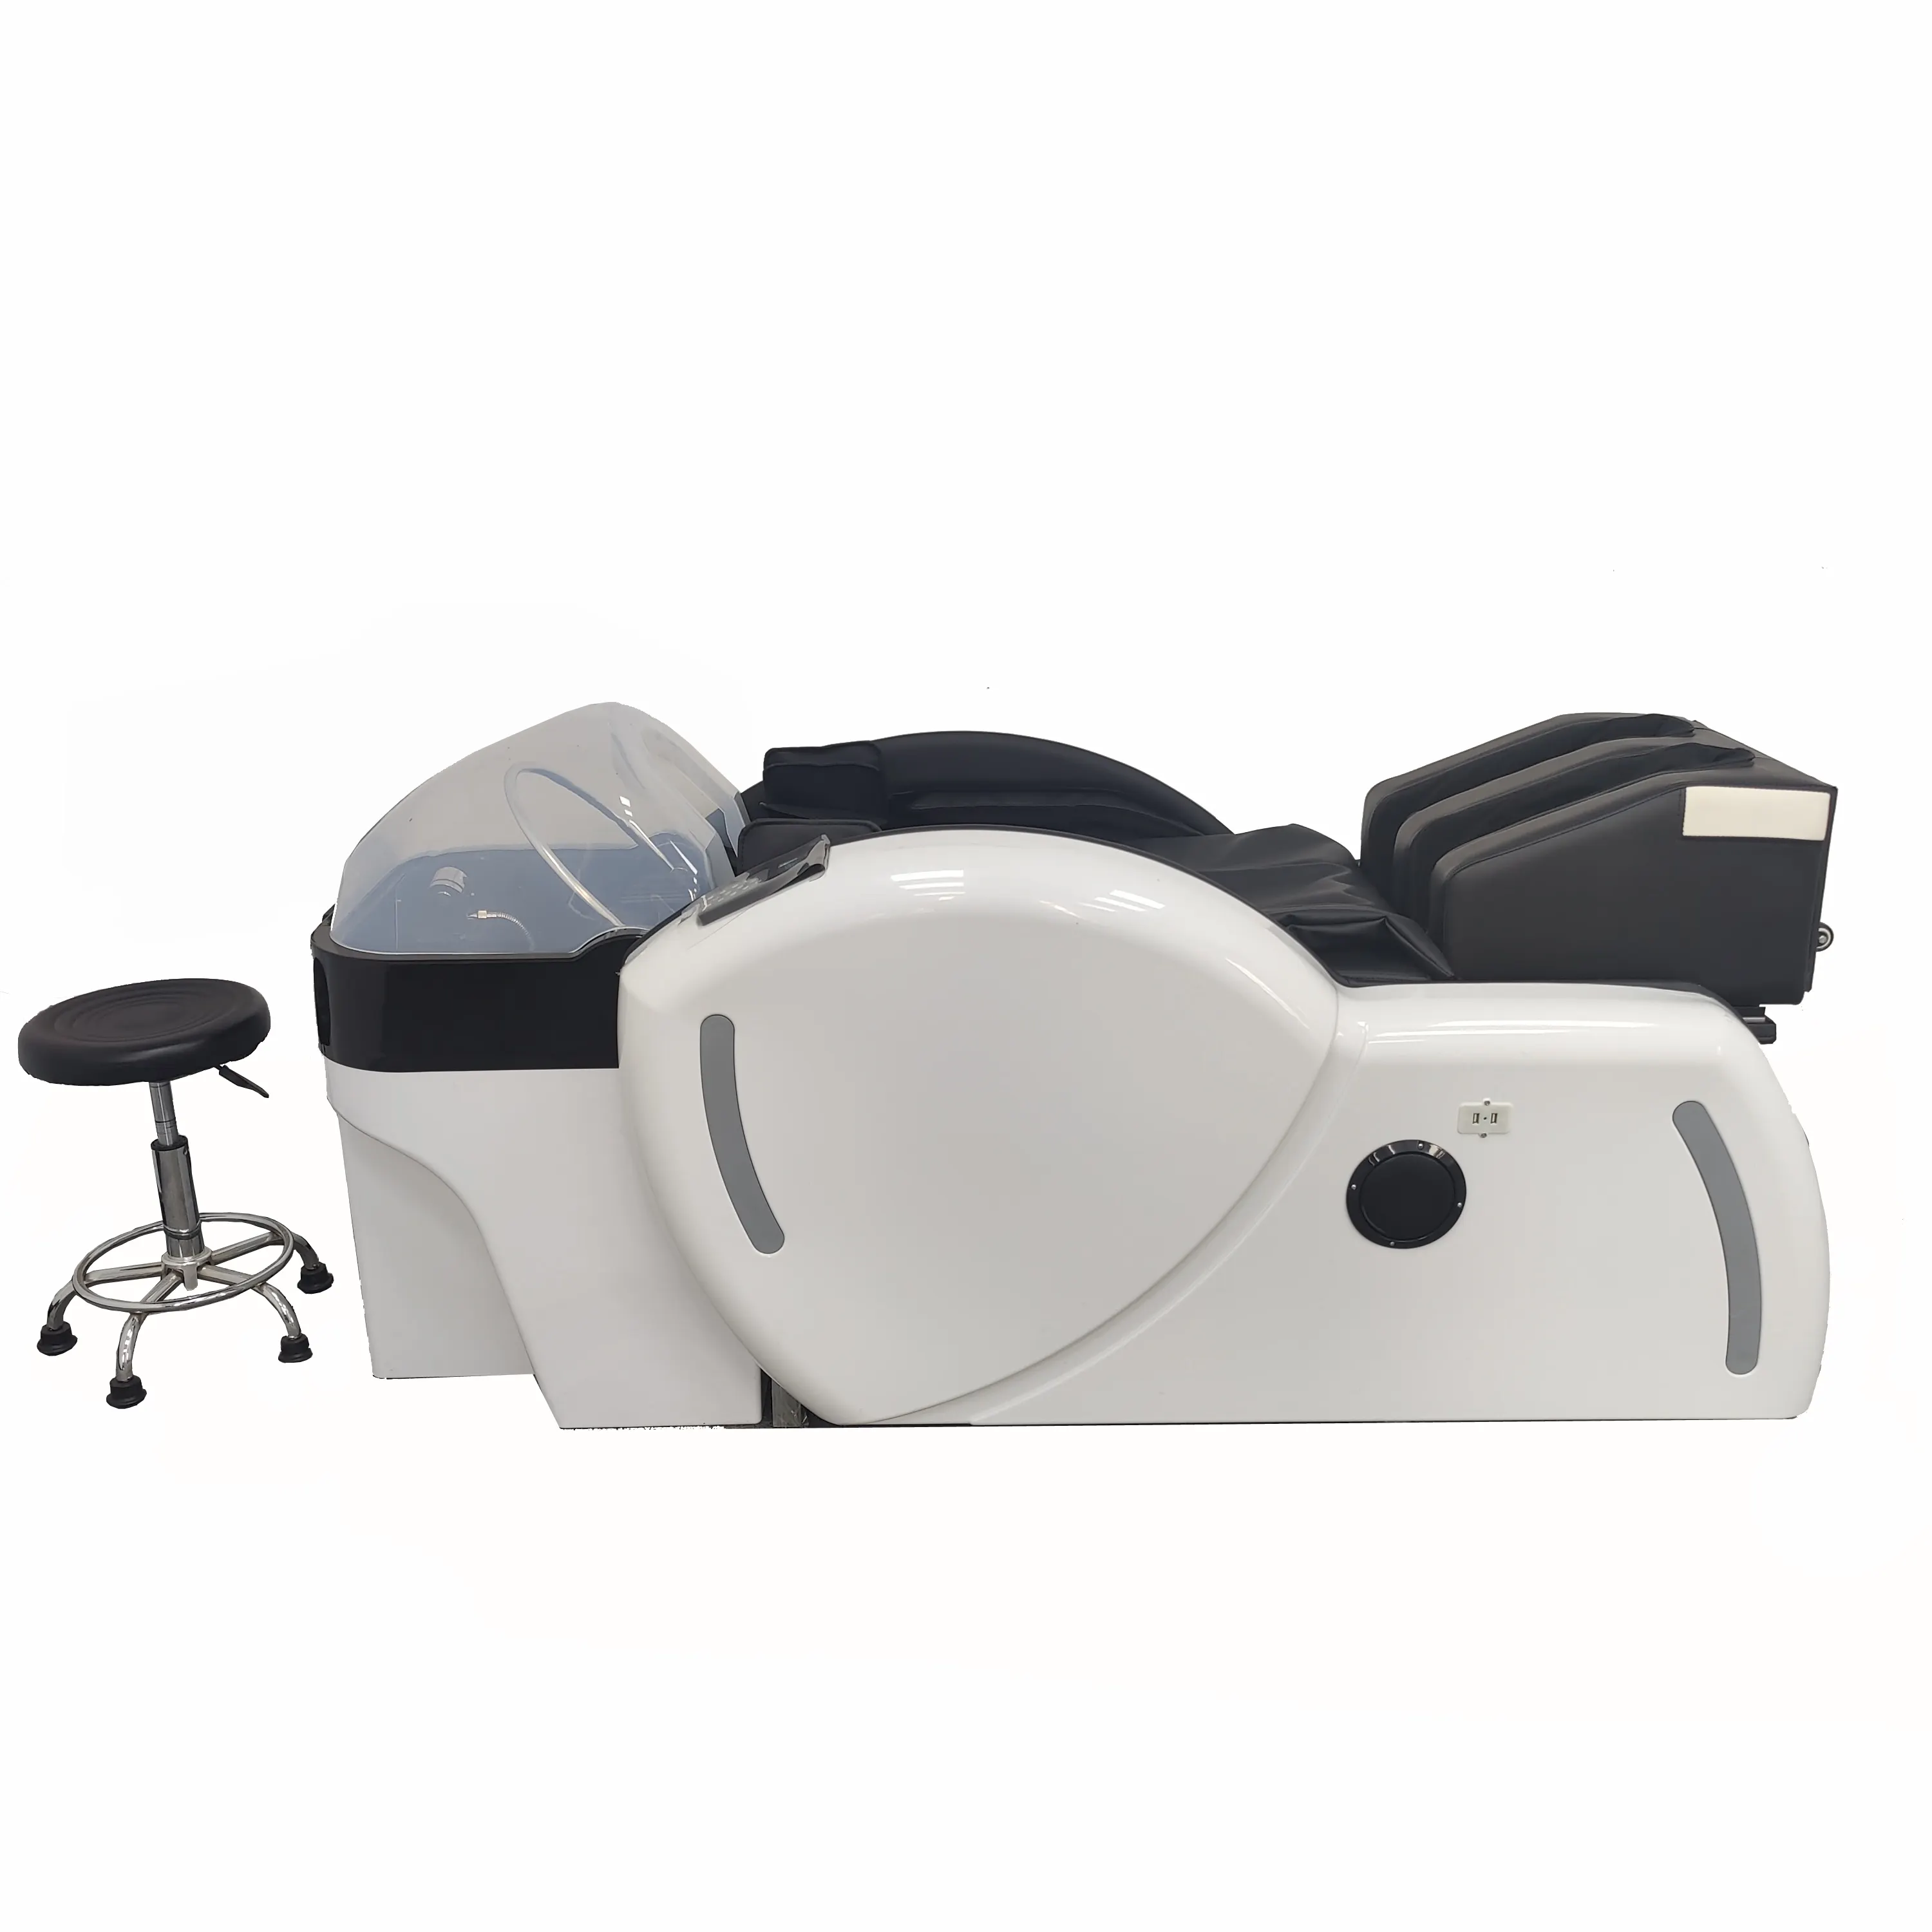 Hot Selling Brand New Original Inverter Plc Chair Professional Spa Shampoo Beauty Massage Bed Salon Hair Washing